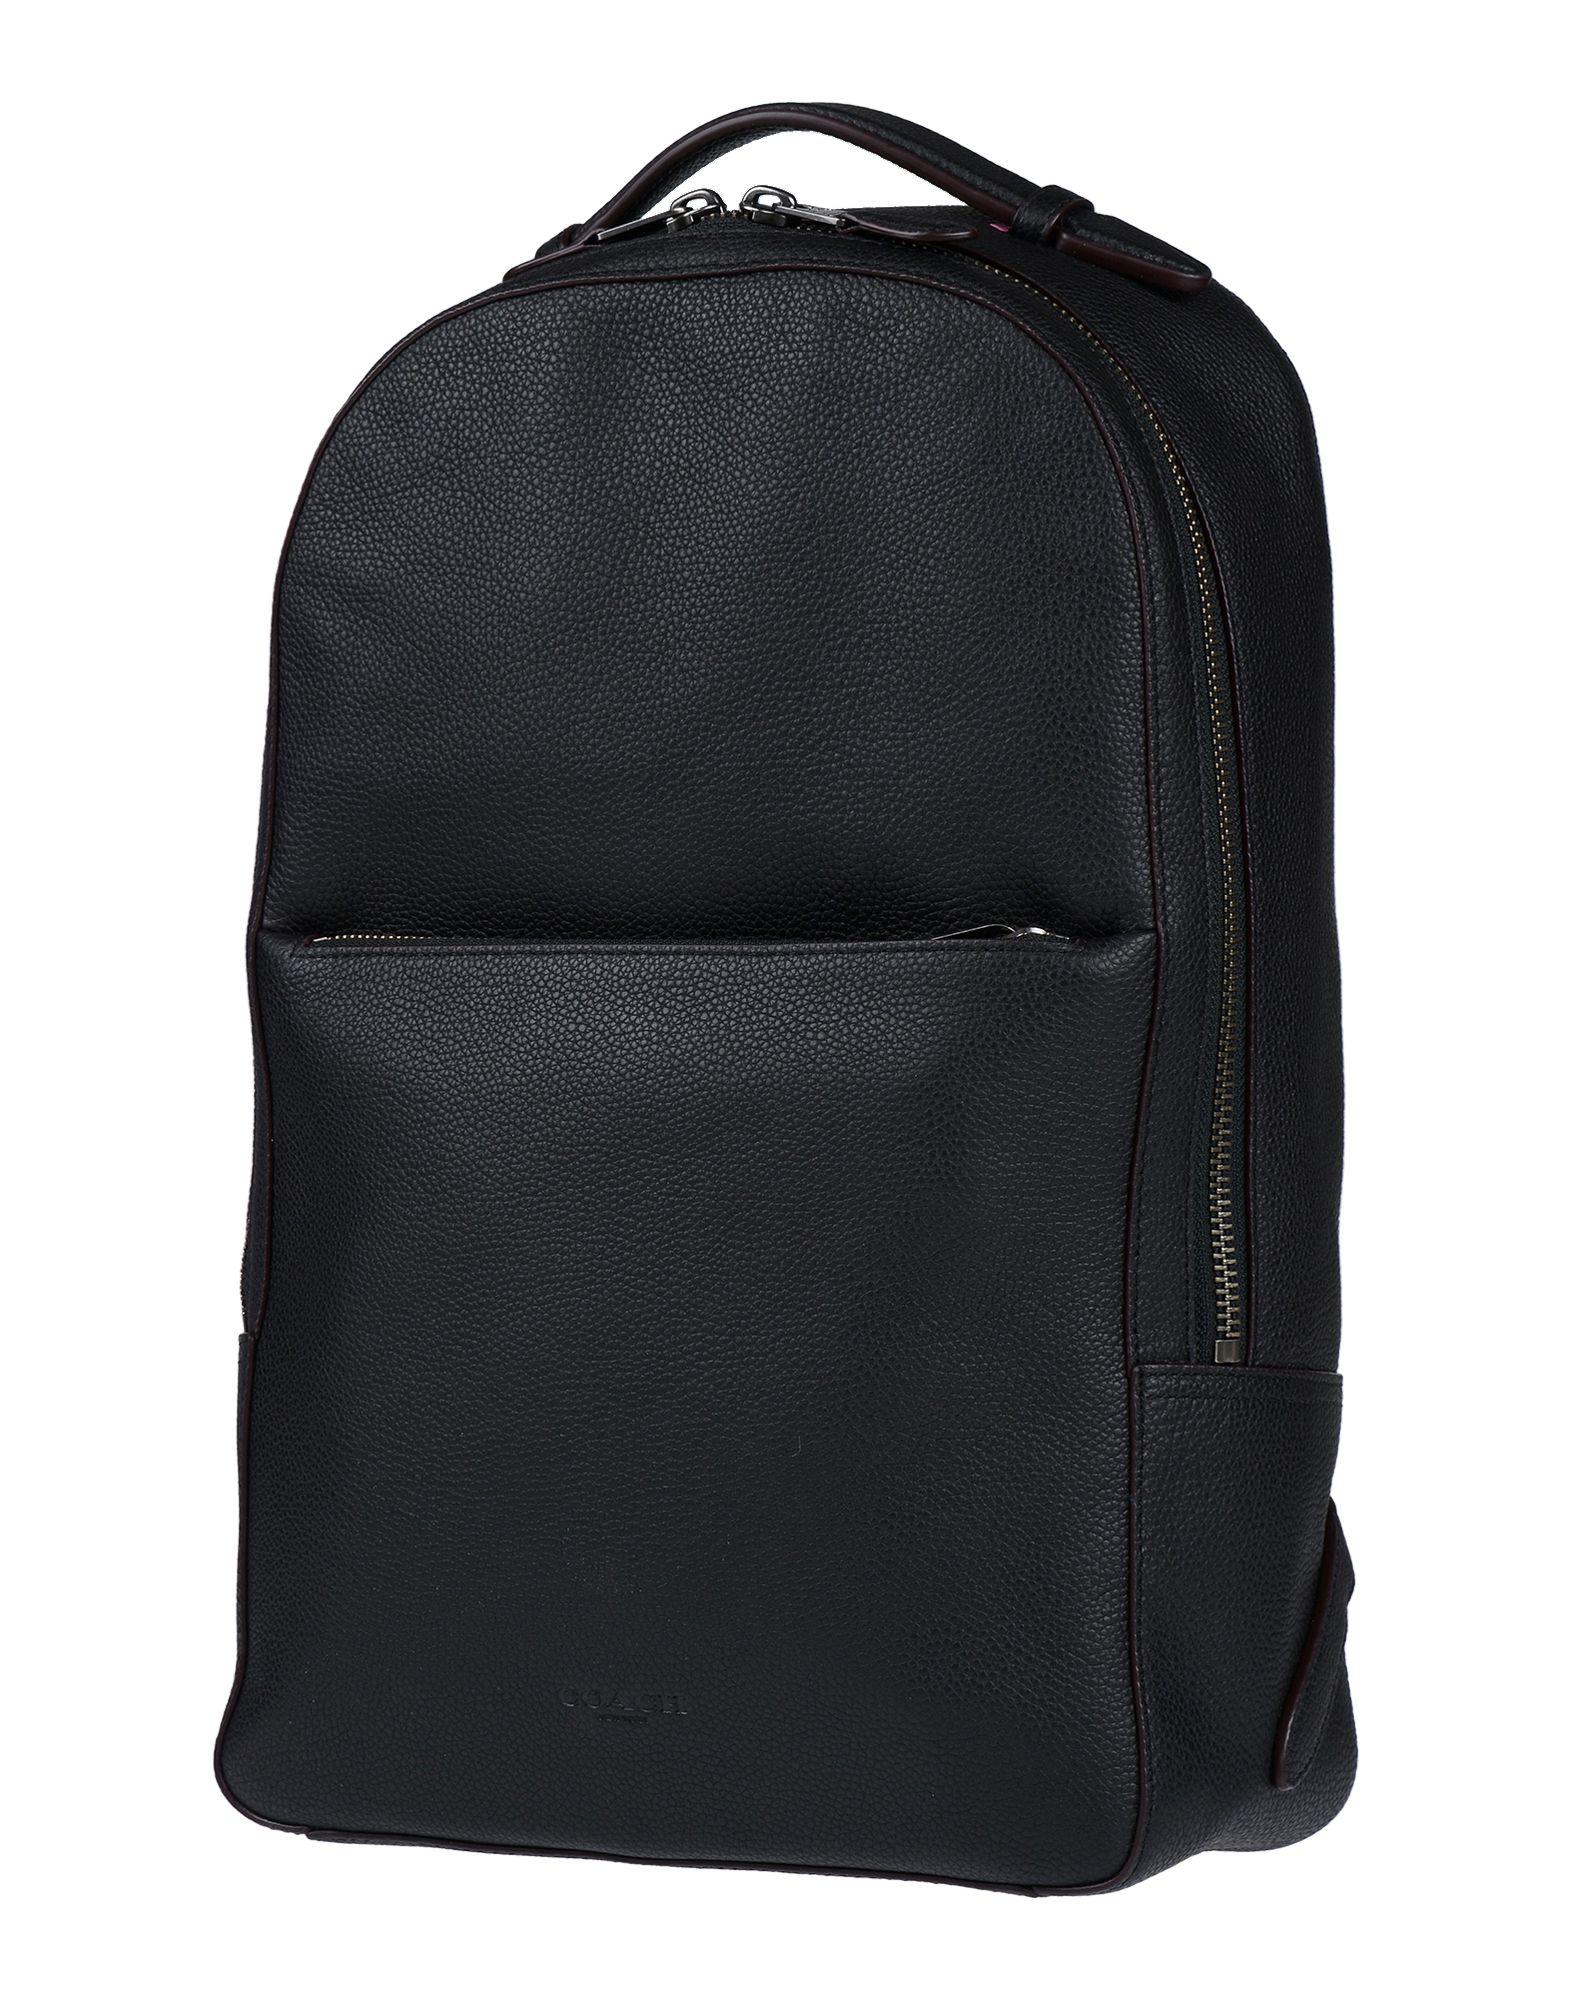 COACH Backpacks & Fanny Packs in Black for Men - Lyst